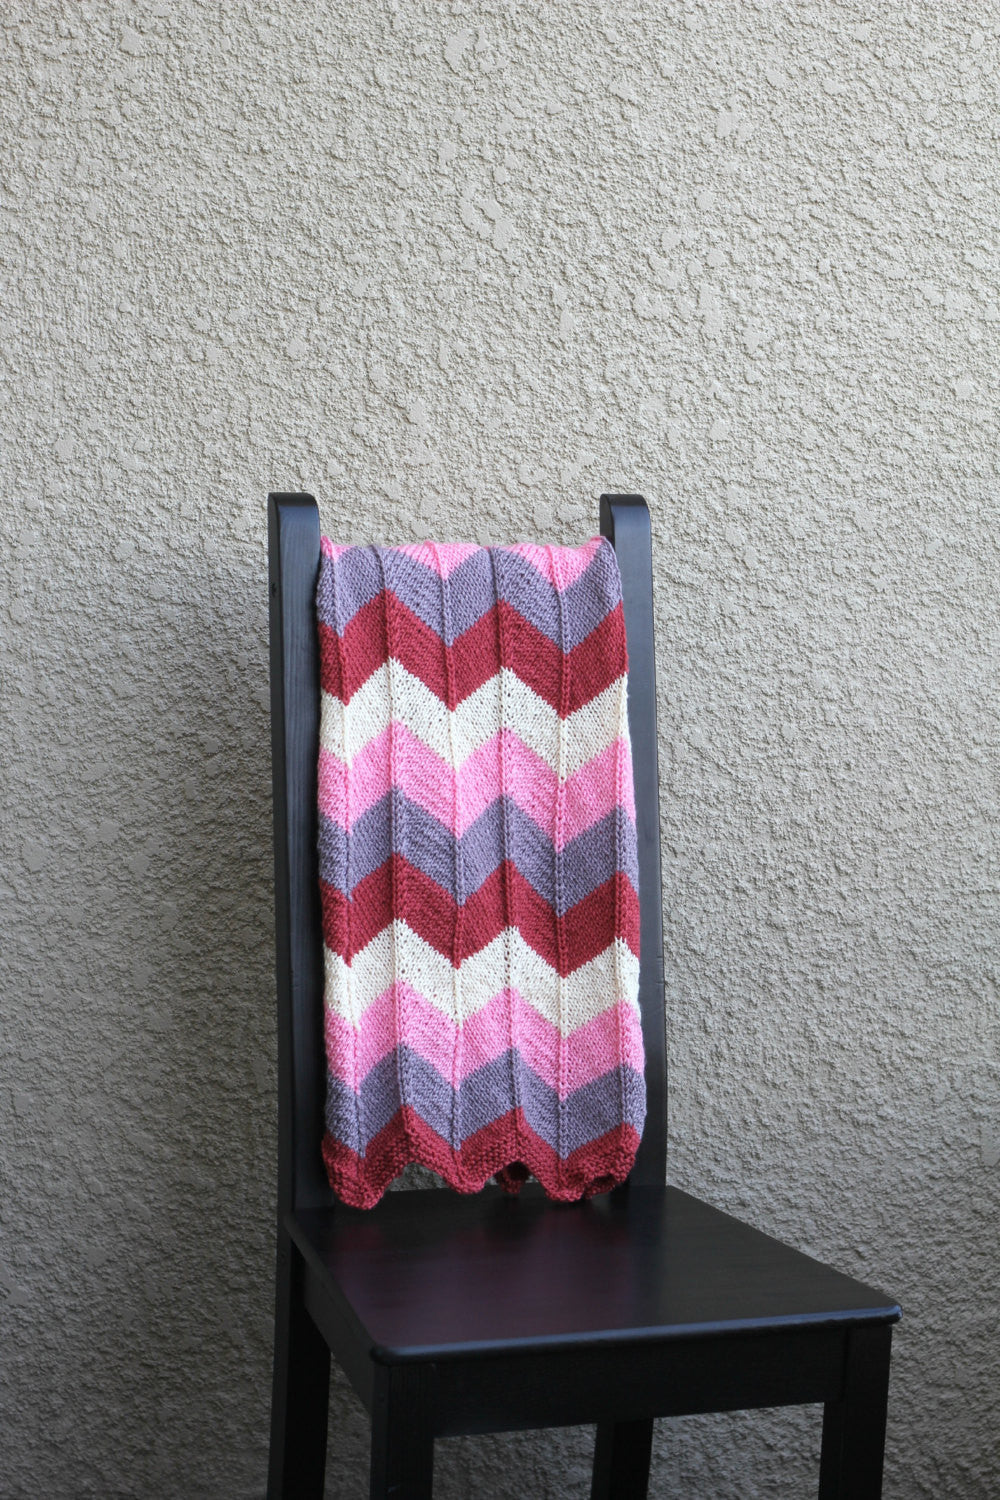 Knit baby blanket